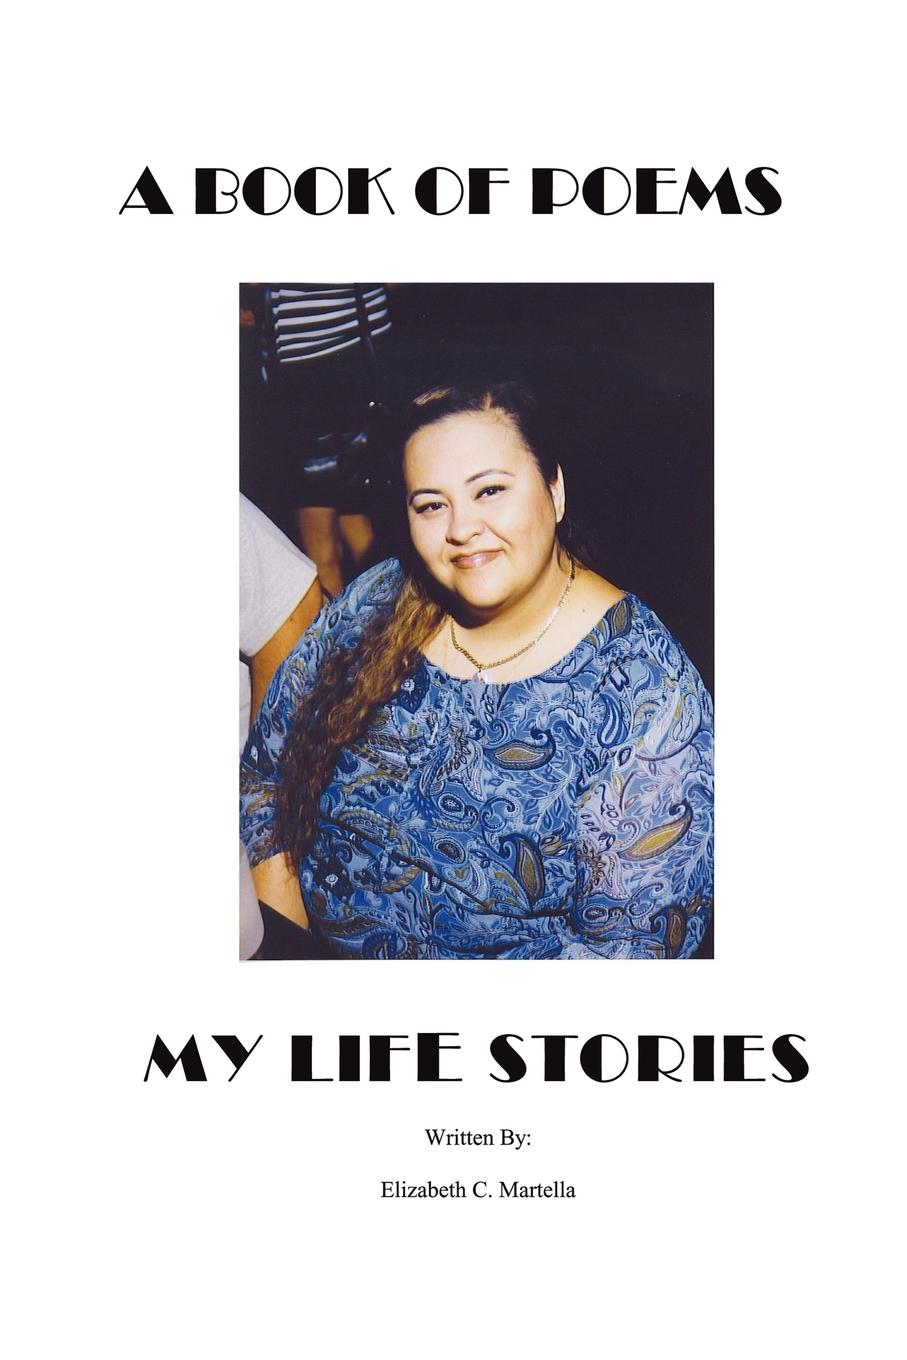 A book of poems~ My life stories - Martella, Elizabeth